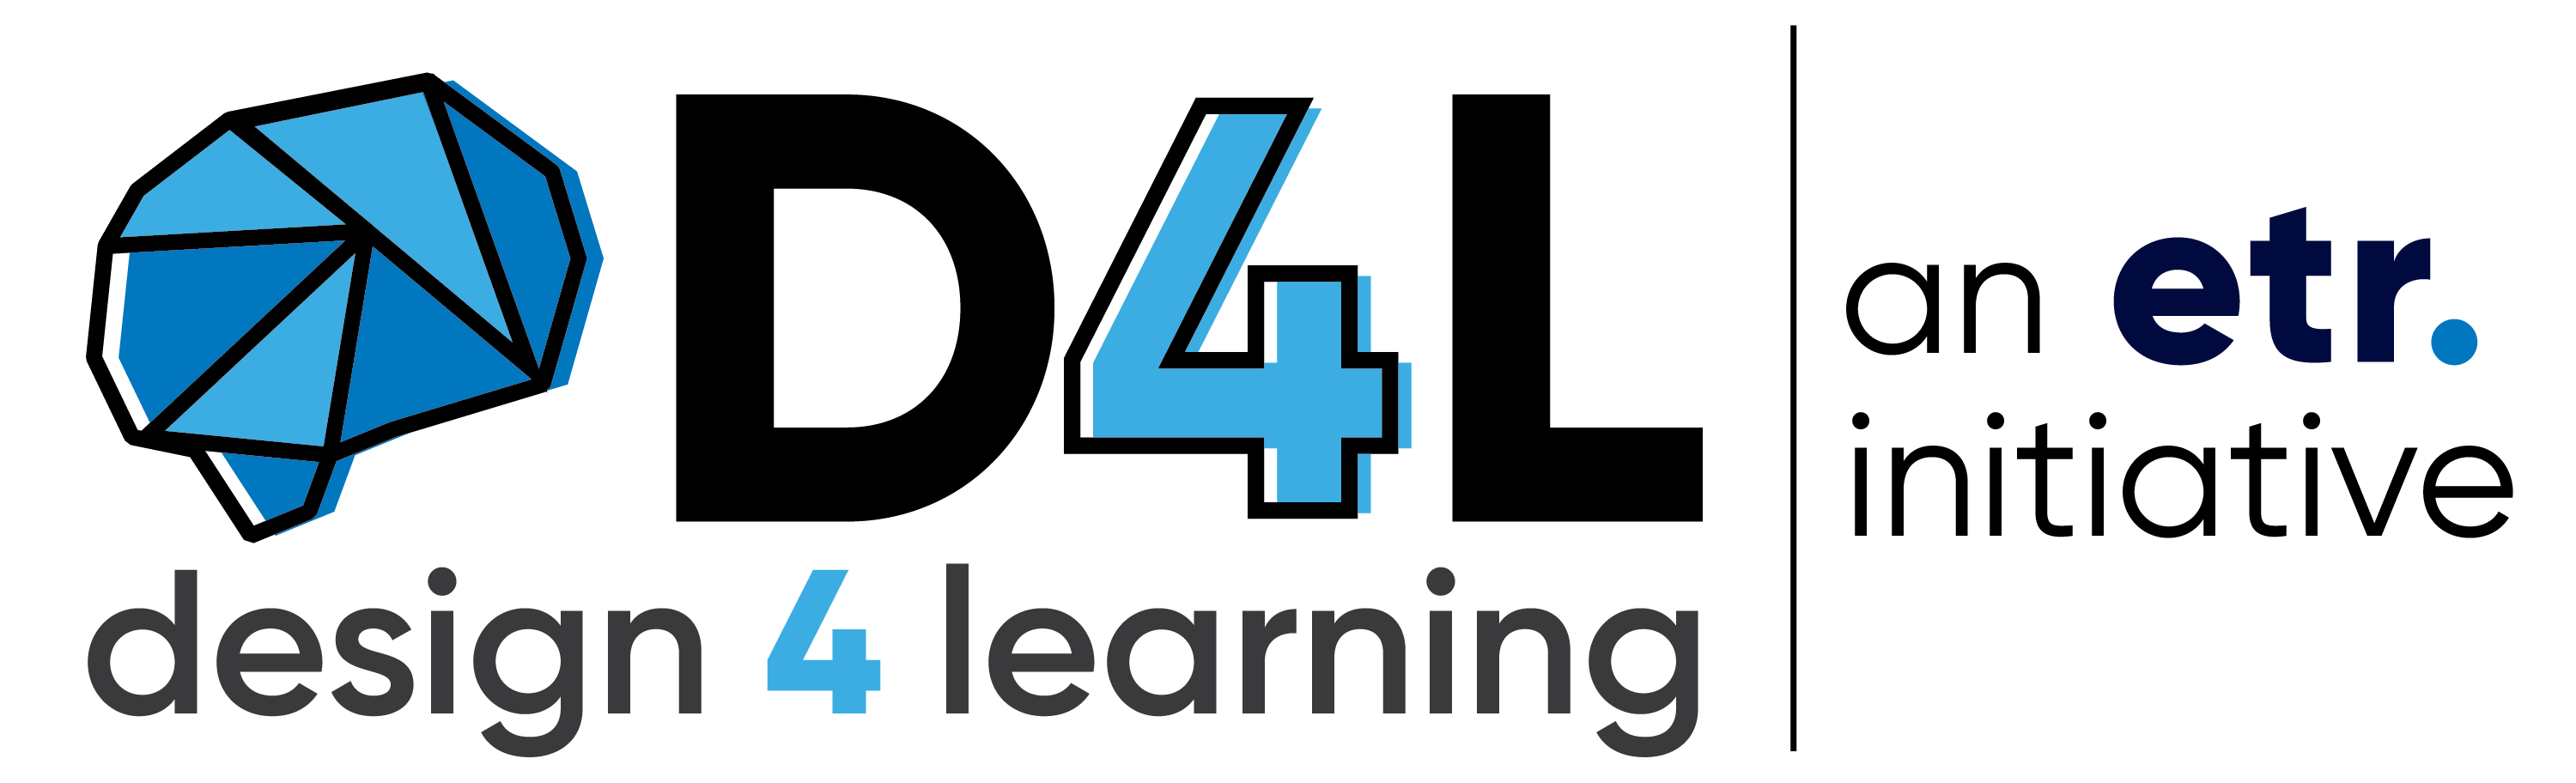 D4L logo